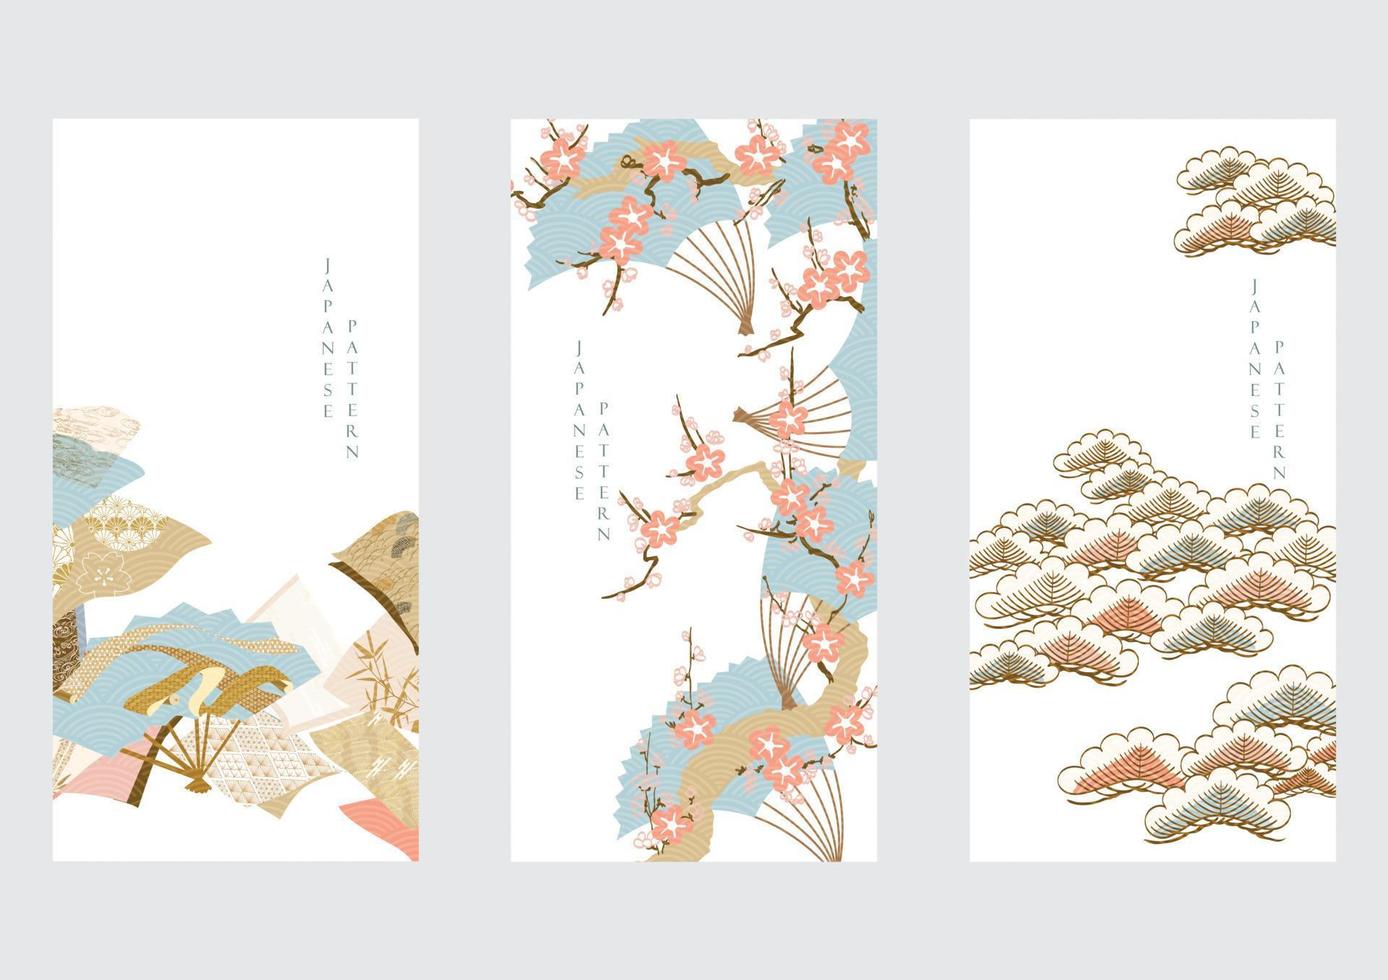 abstrakt bakgrund i orientalisk stil. kinesisk ny år baner. geometrisk linje med japansk mönster vektor. pion blomma och vågig objekt. vektor